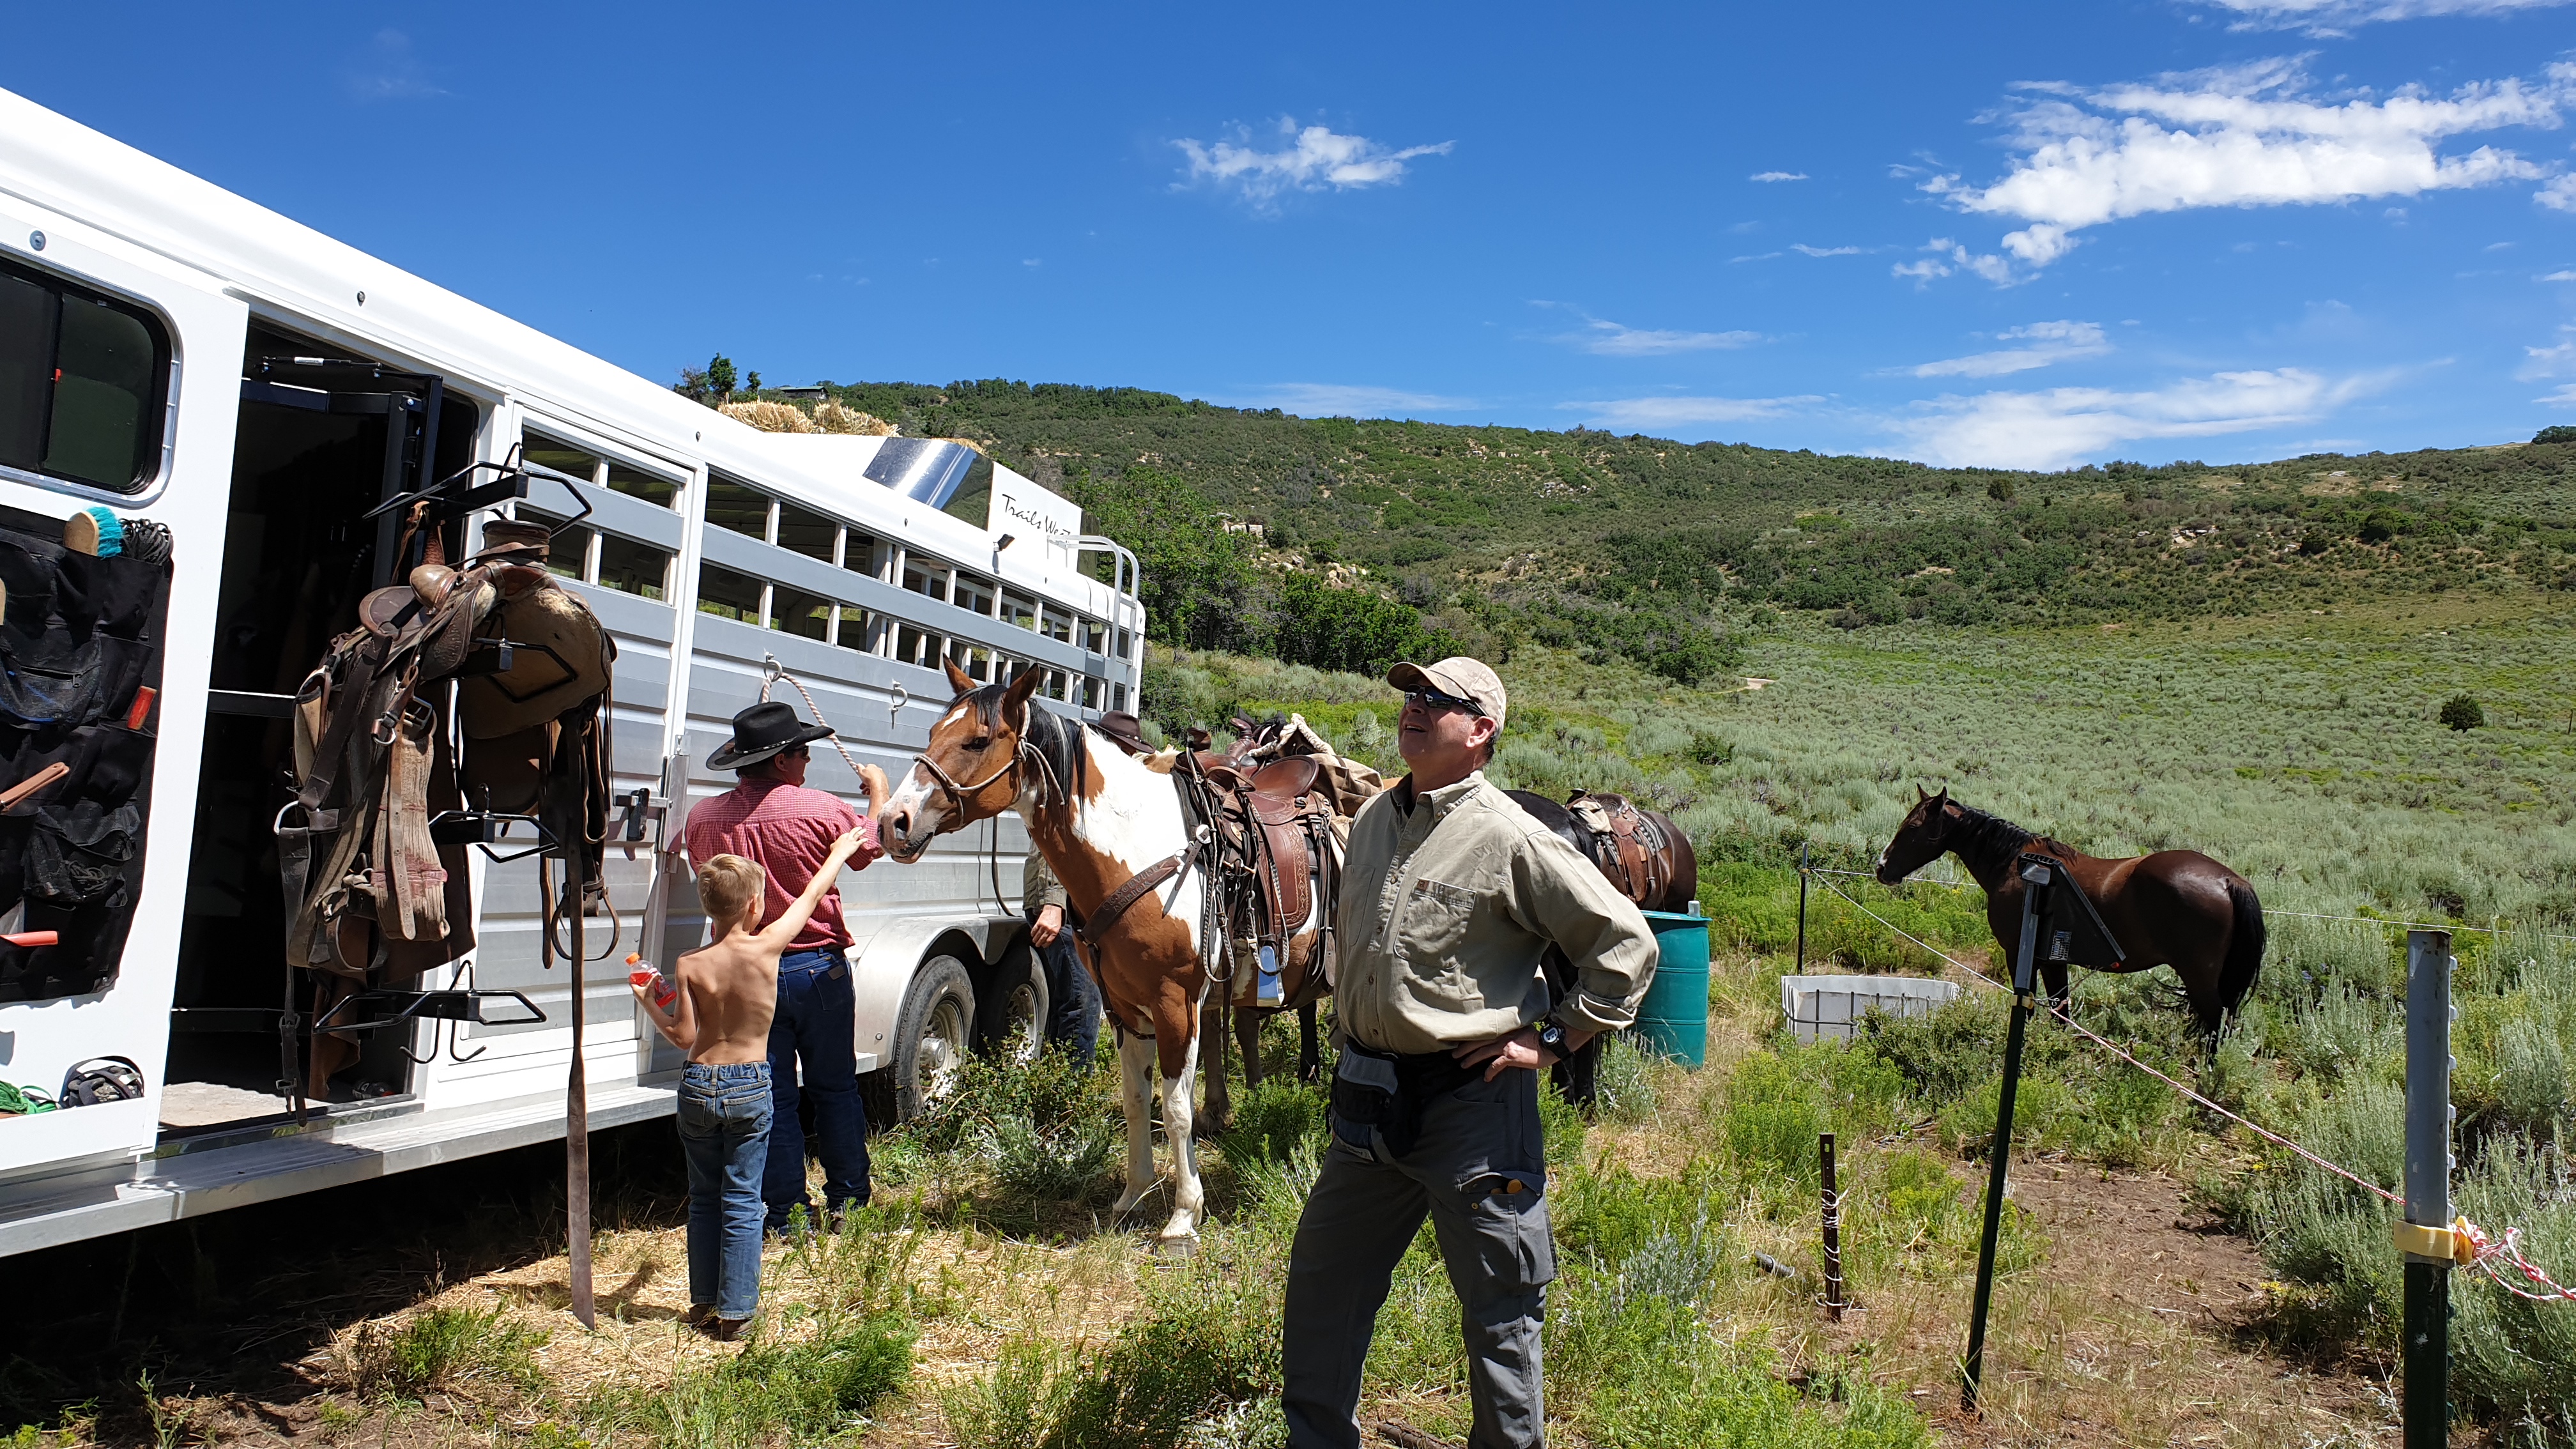 Utah horseback riding tour by New3S